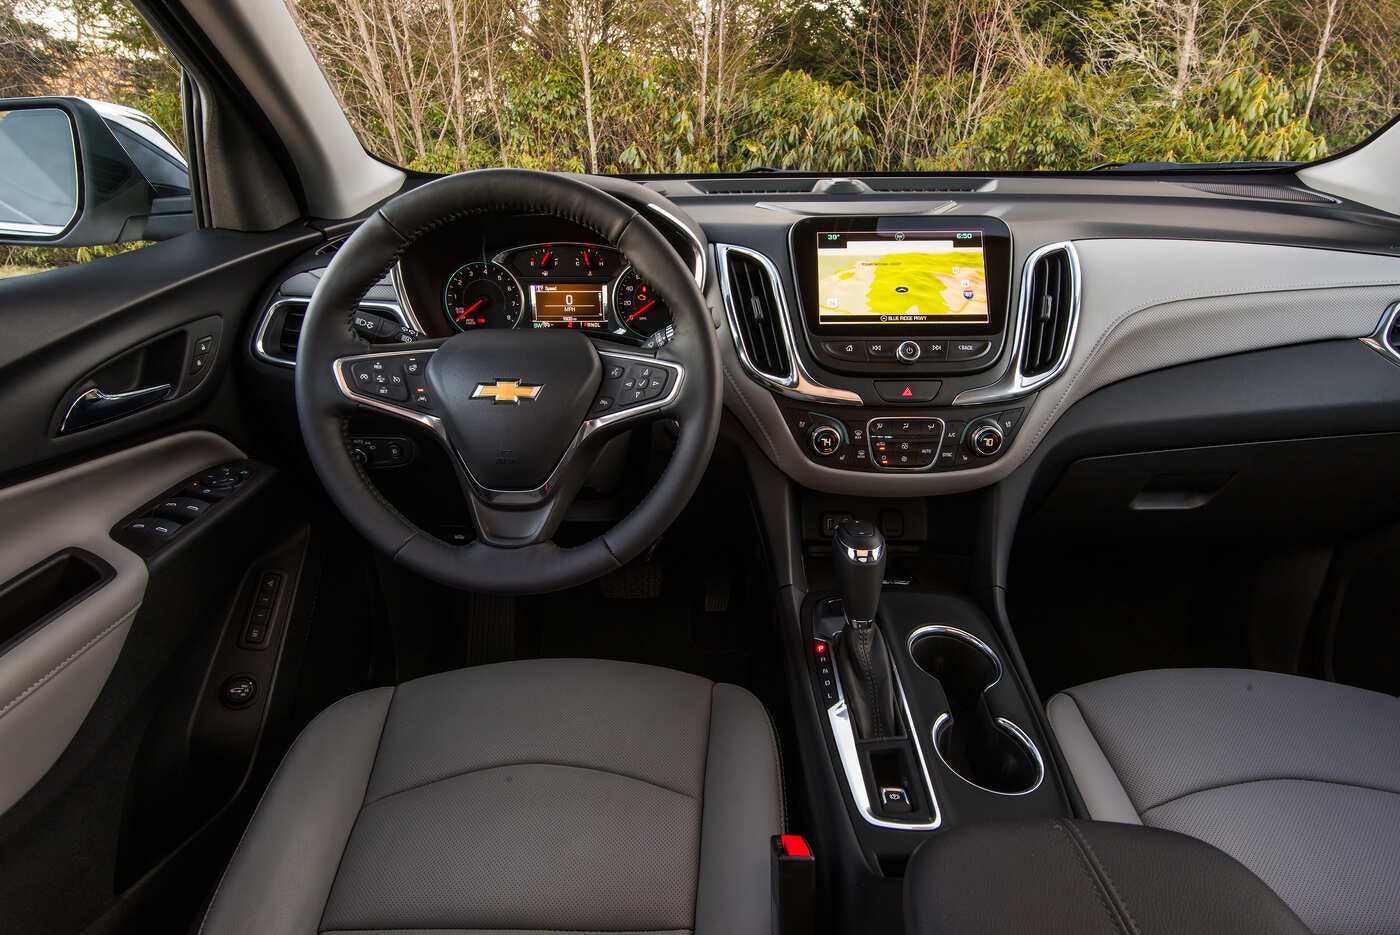 2020 Chevrolet Equinox Comparisons Reviews Pictures Truecar